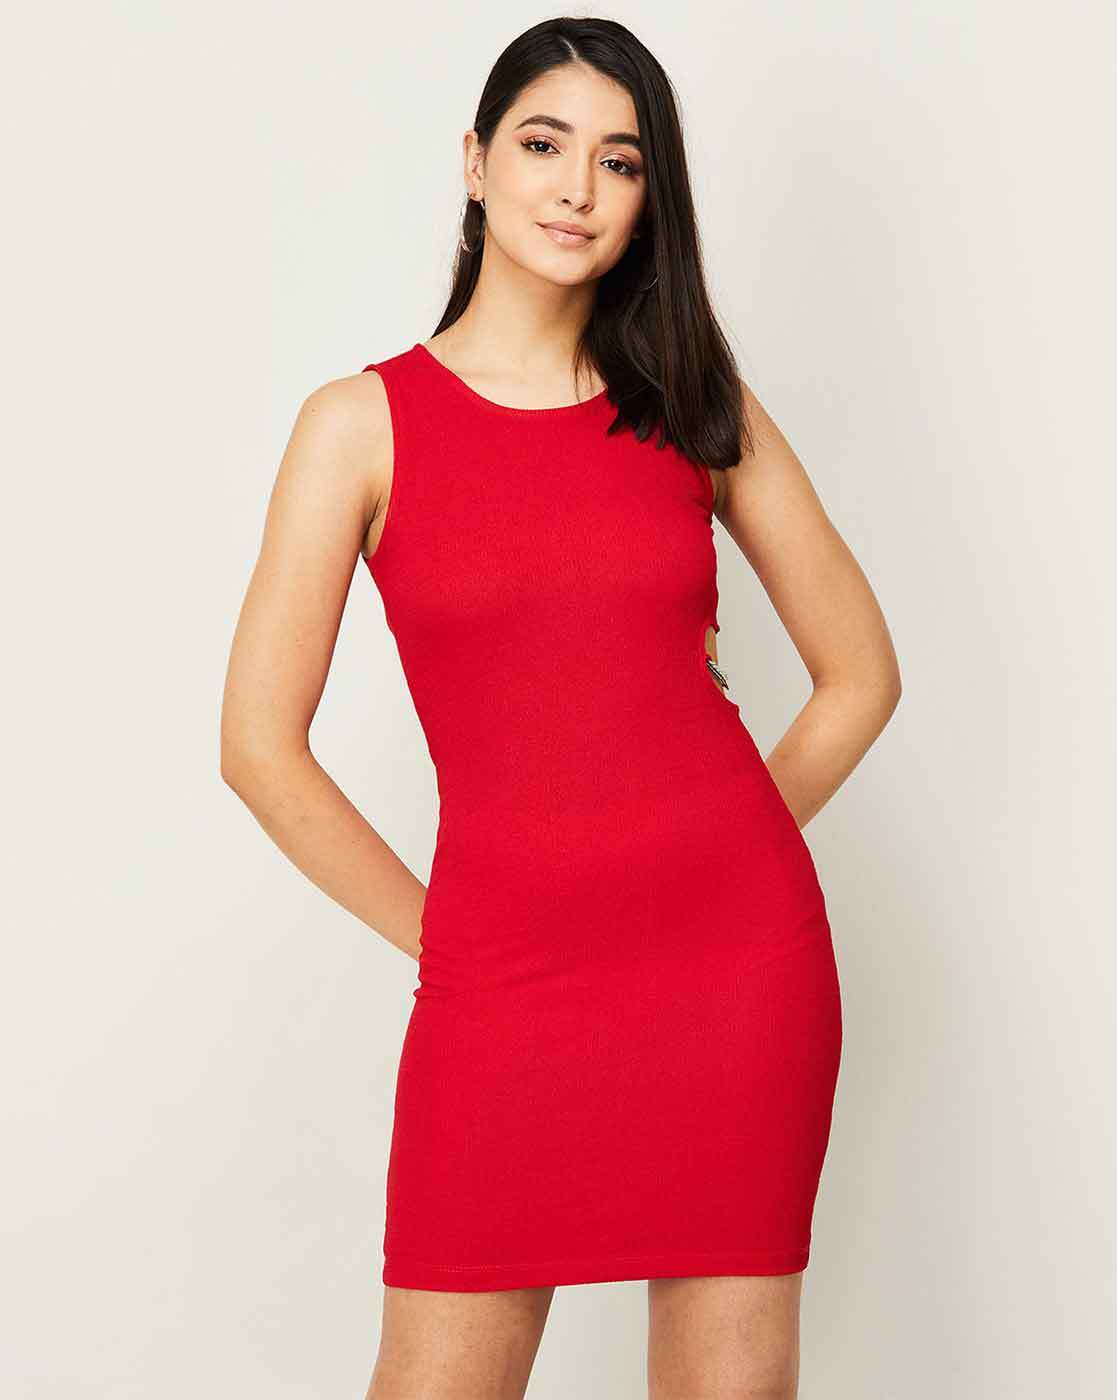 Red Mini Dress - Ribbed Dress - Sleeveless Dress - A-Line Dress - Lulus